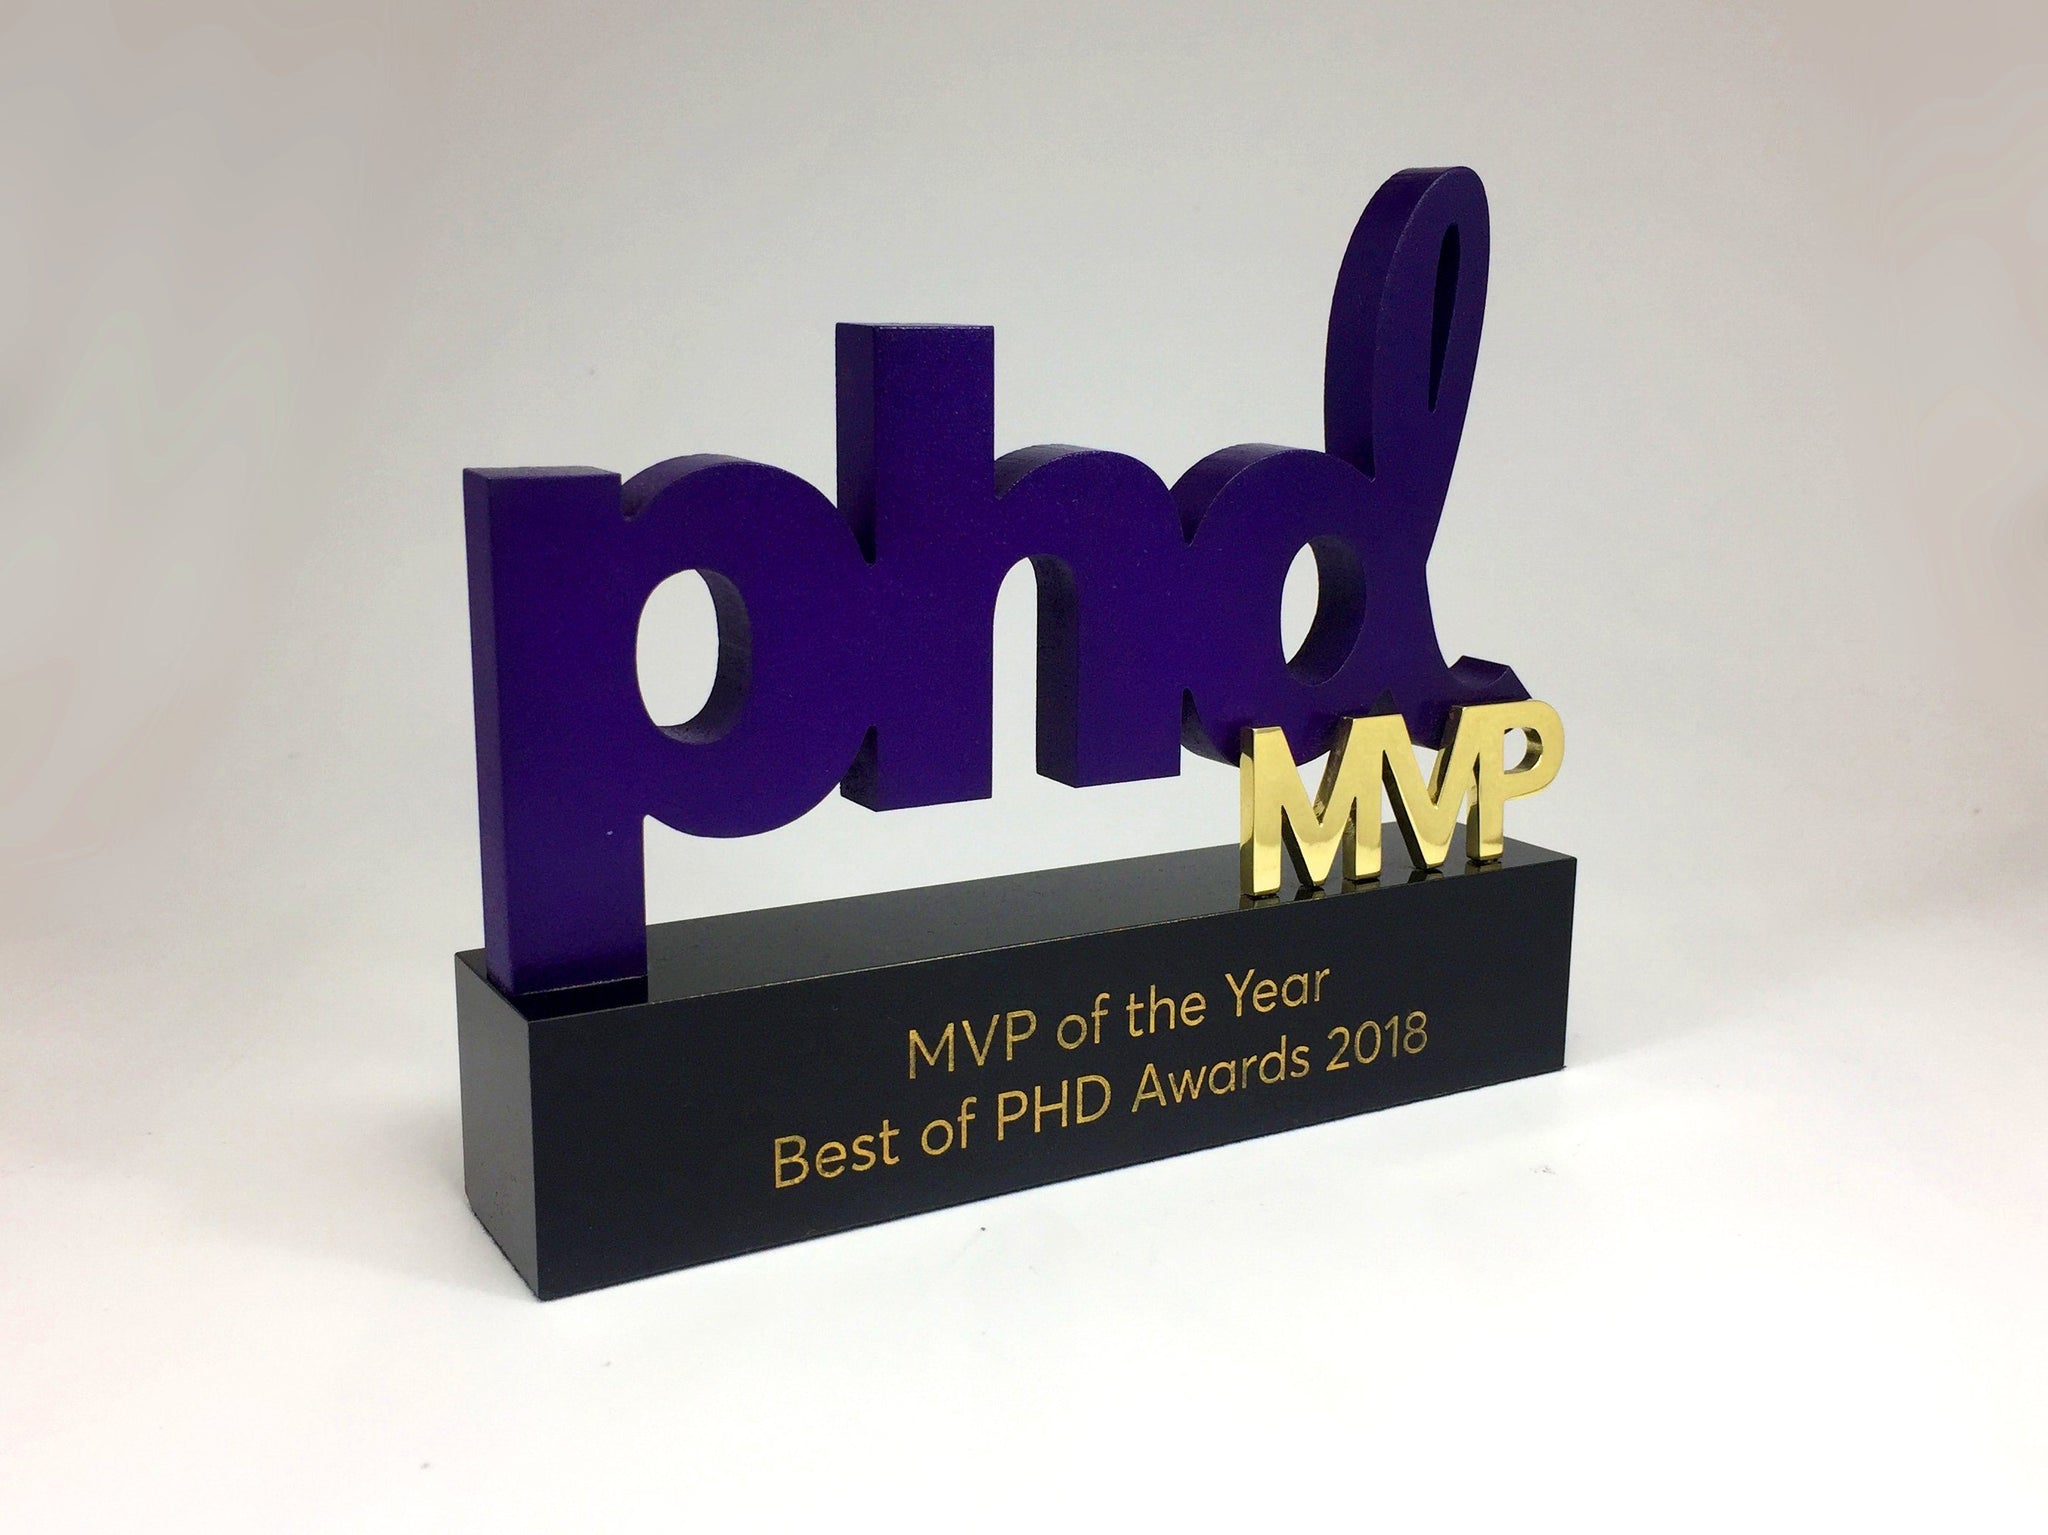 phd awards europe